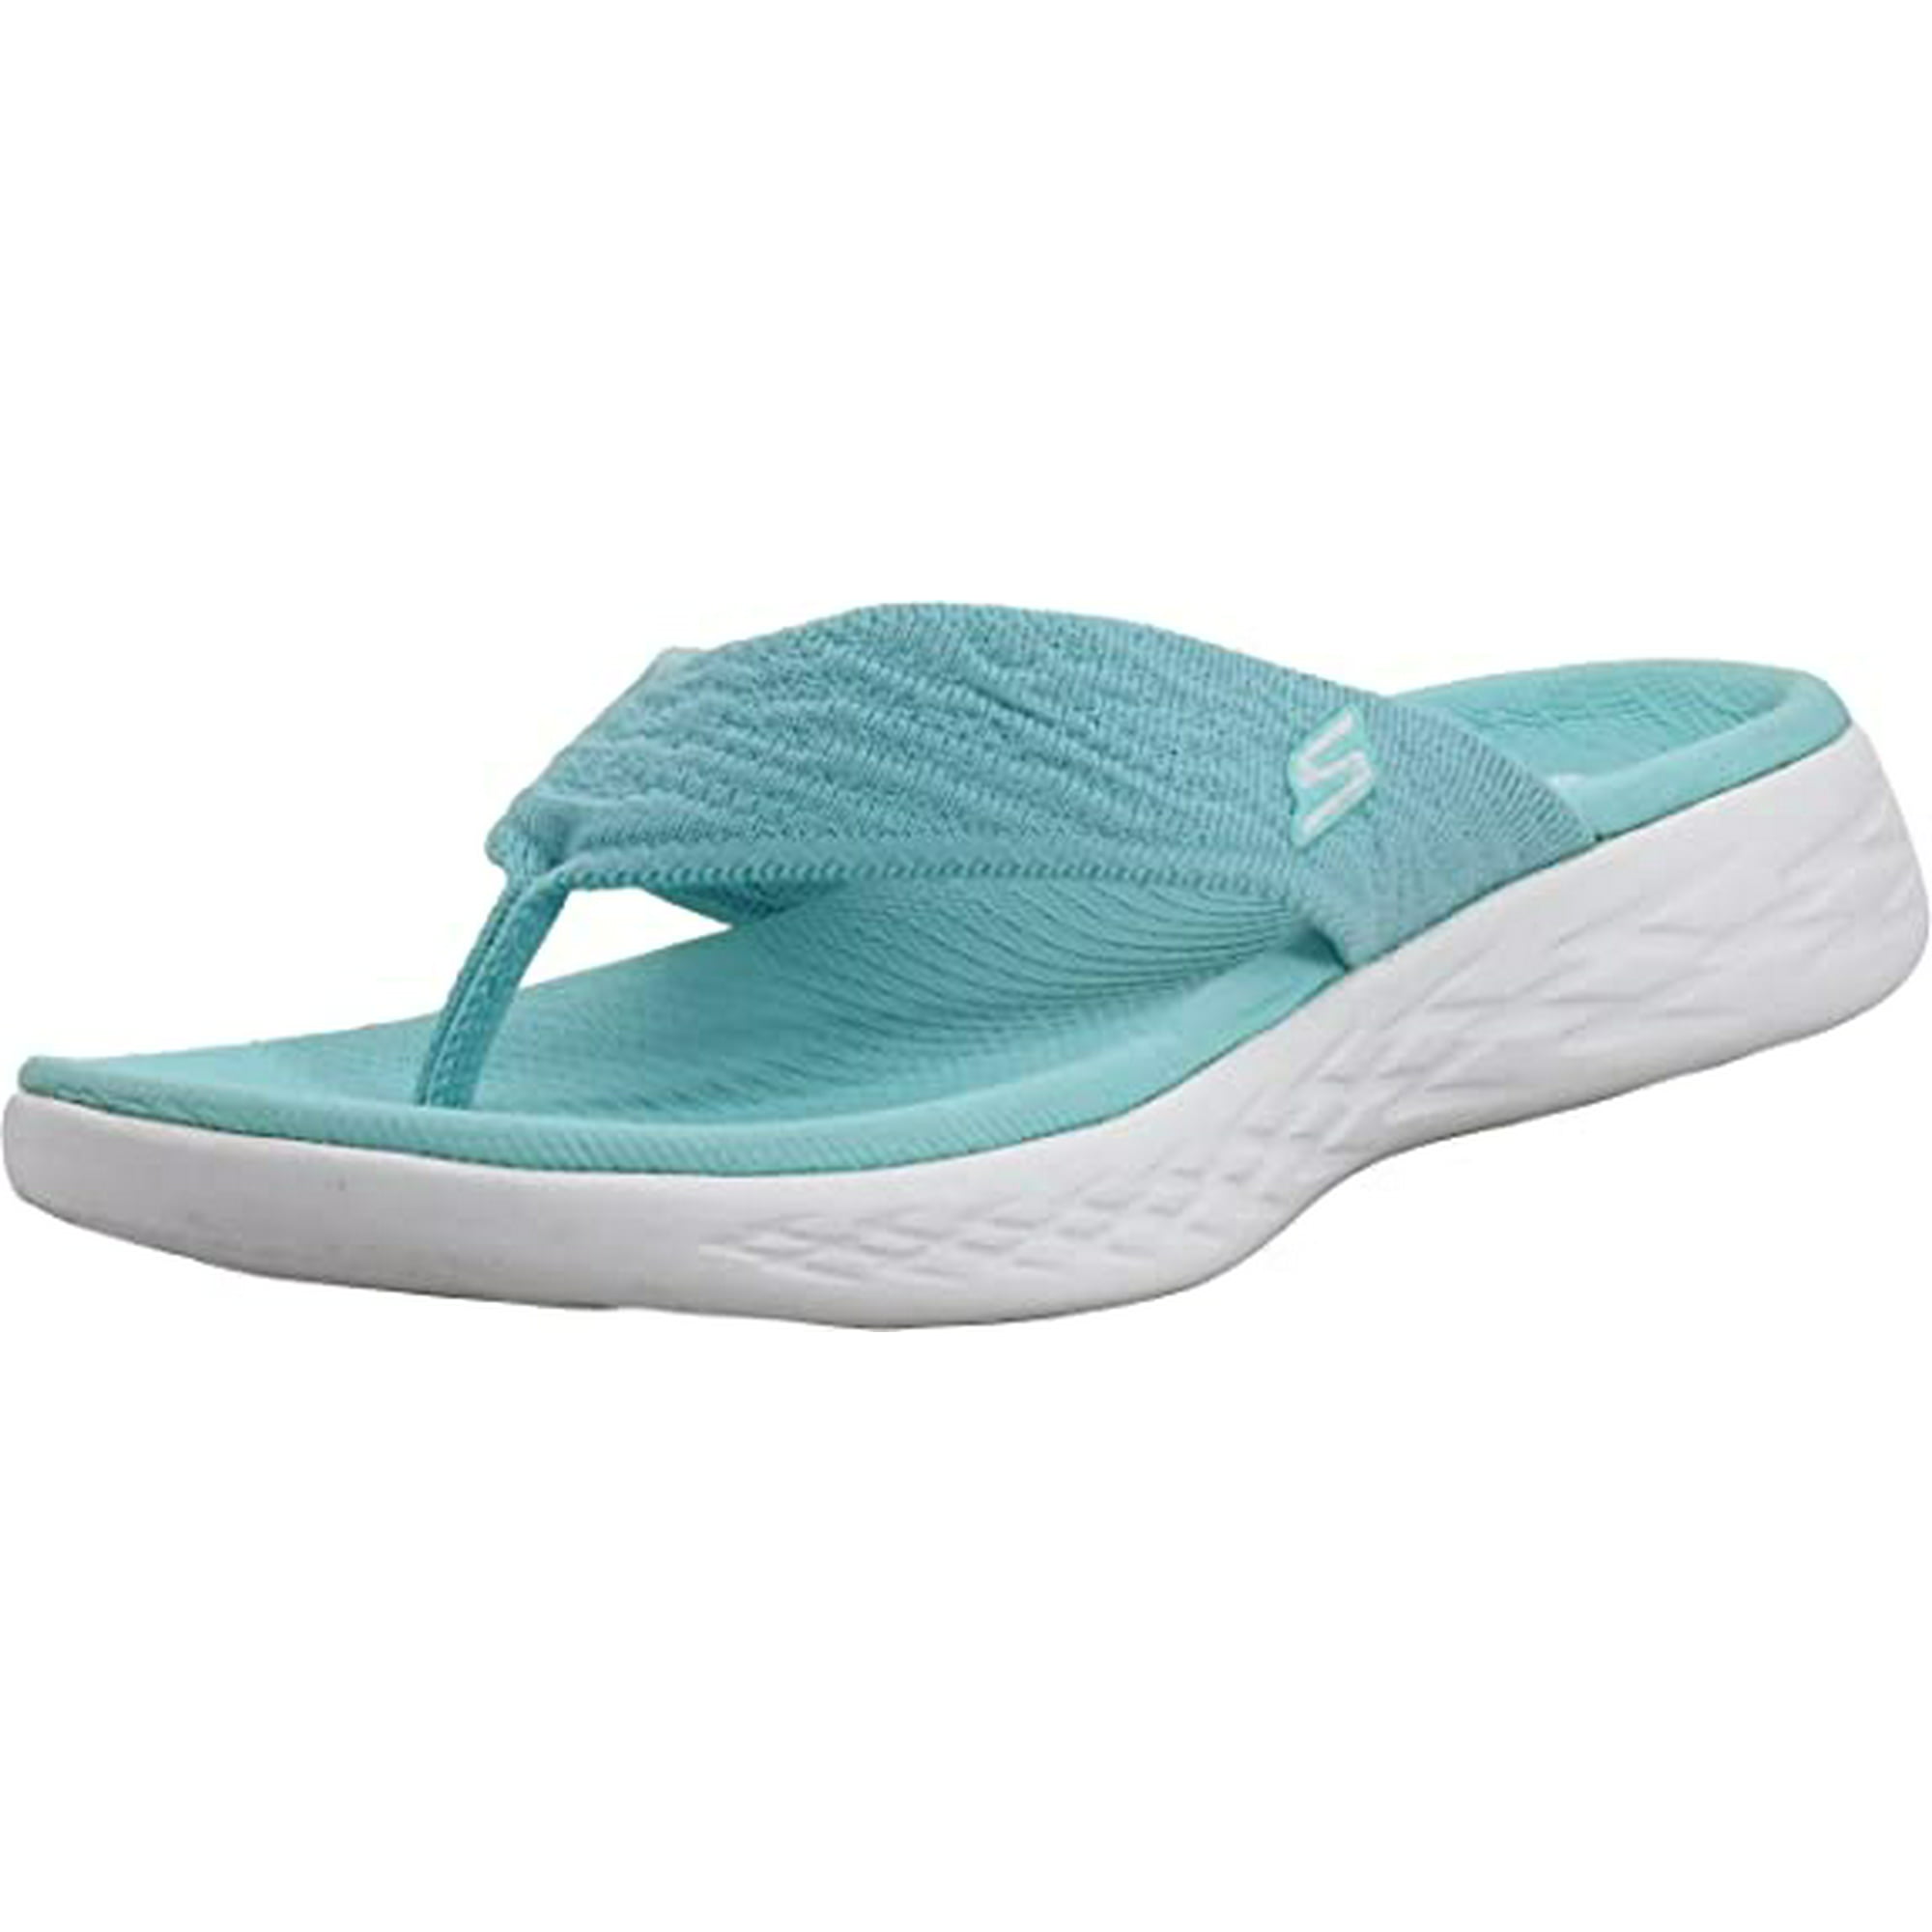 Skechers 600-Sunny Flip-Flop, Turquoise, M US Walmart.com